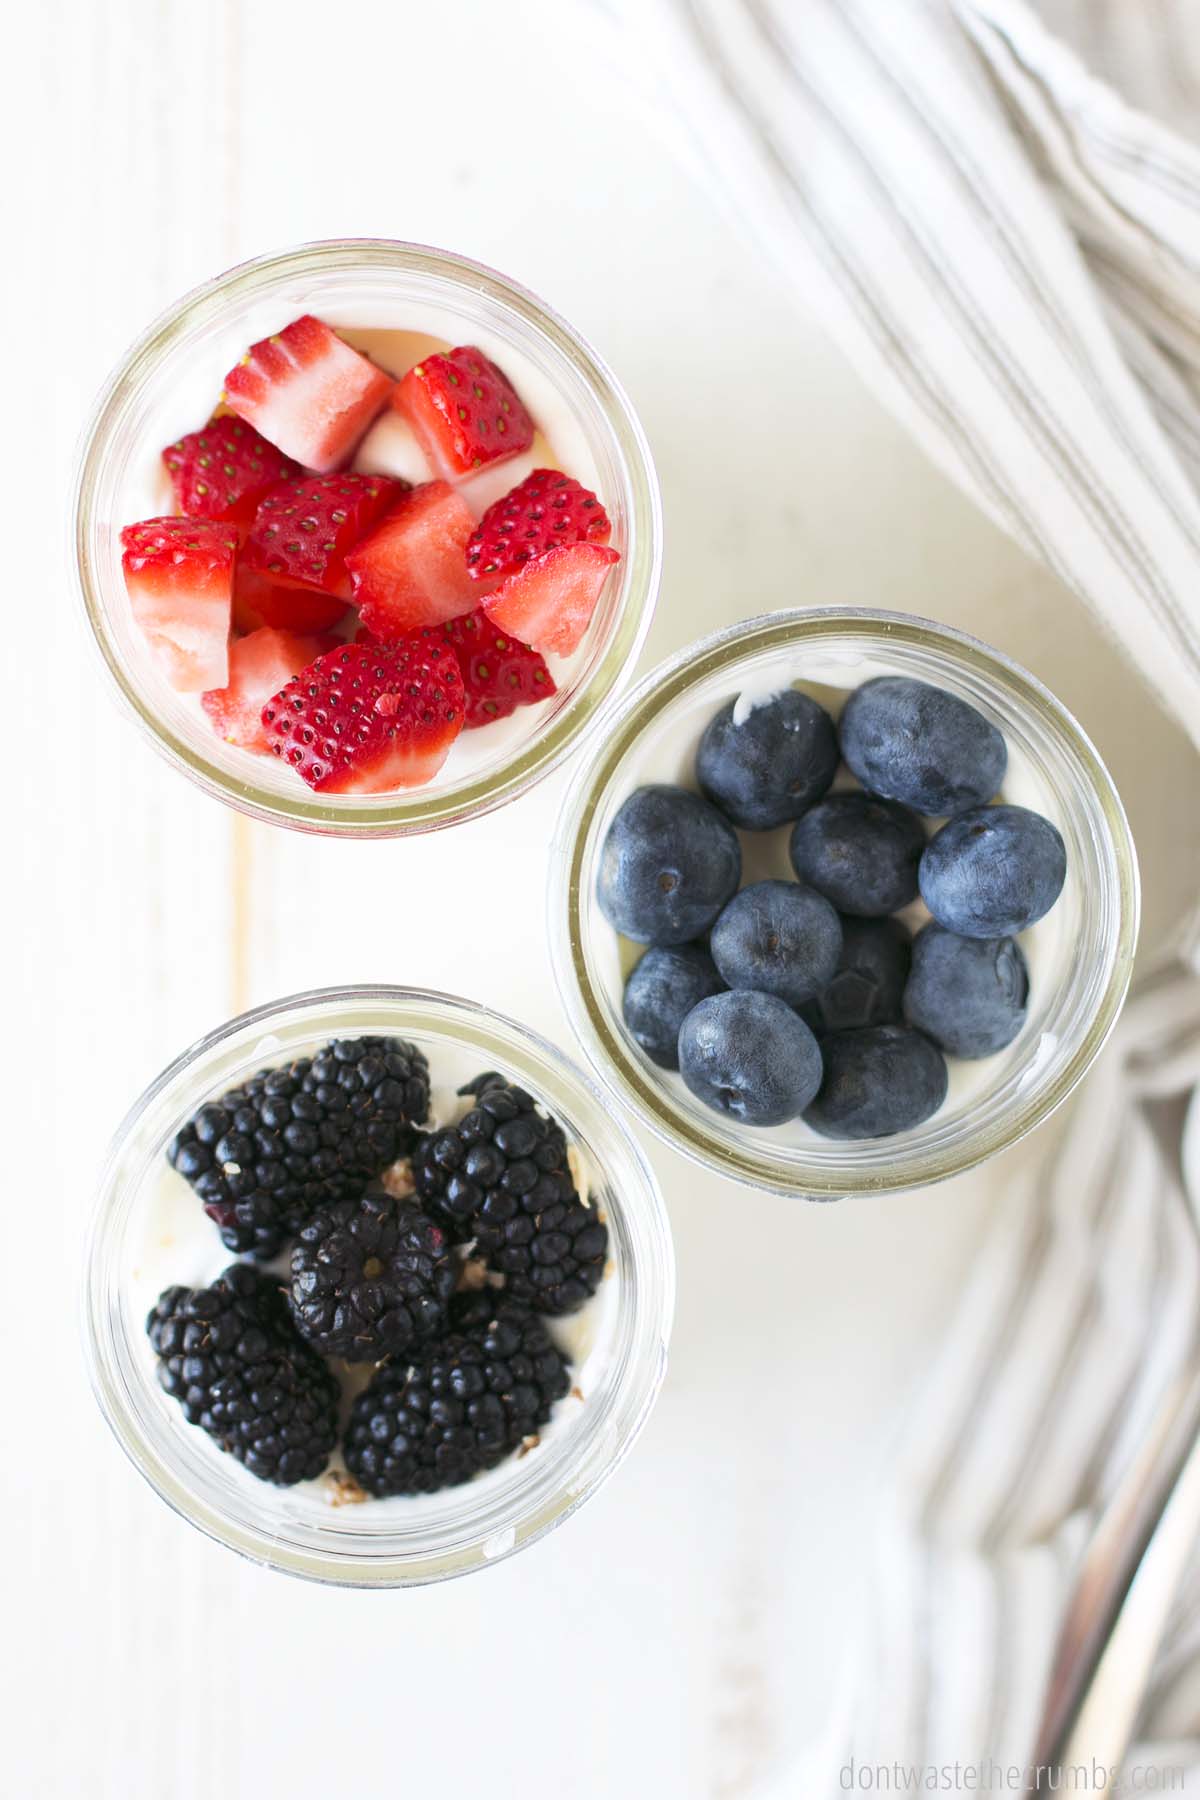 Overview of three yogurt parfaits. One has yogurt and sliced strawberries, the other has yogurt and blueberries, the other has yogurt and blackberries.